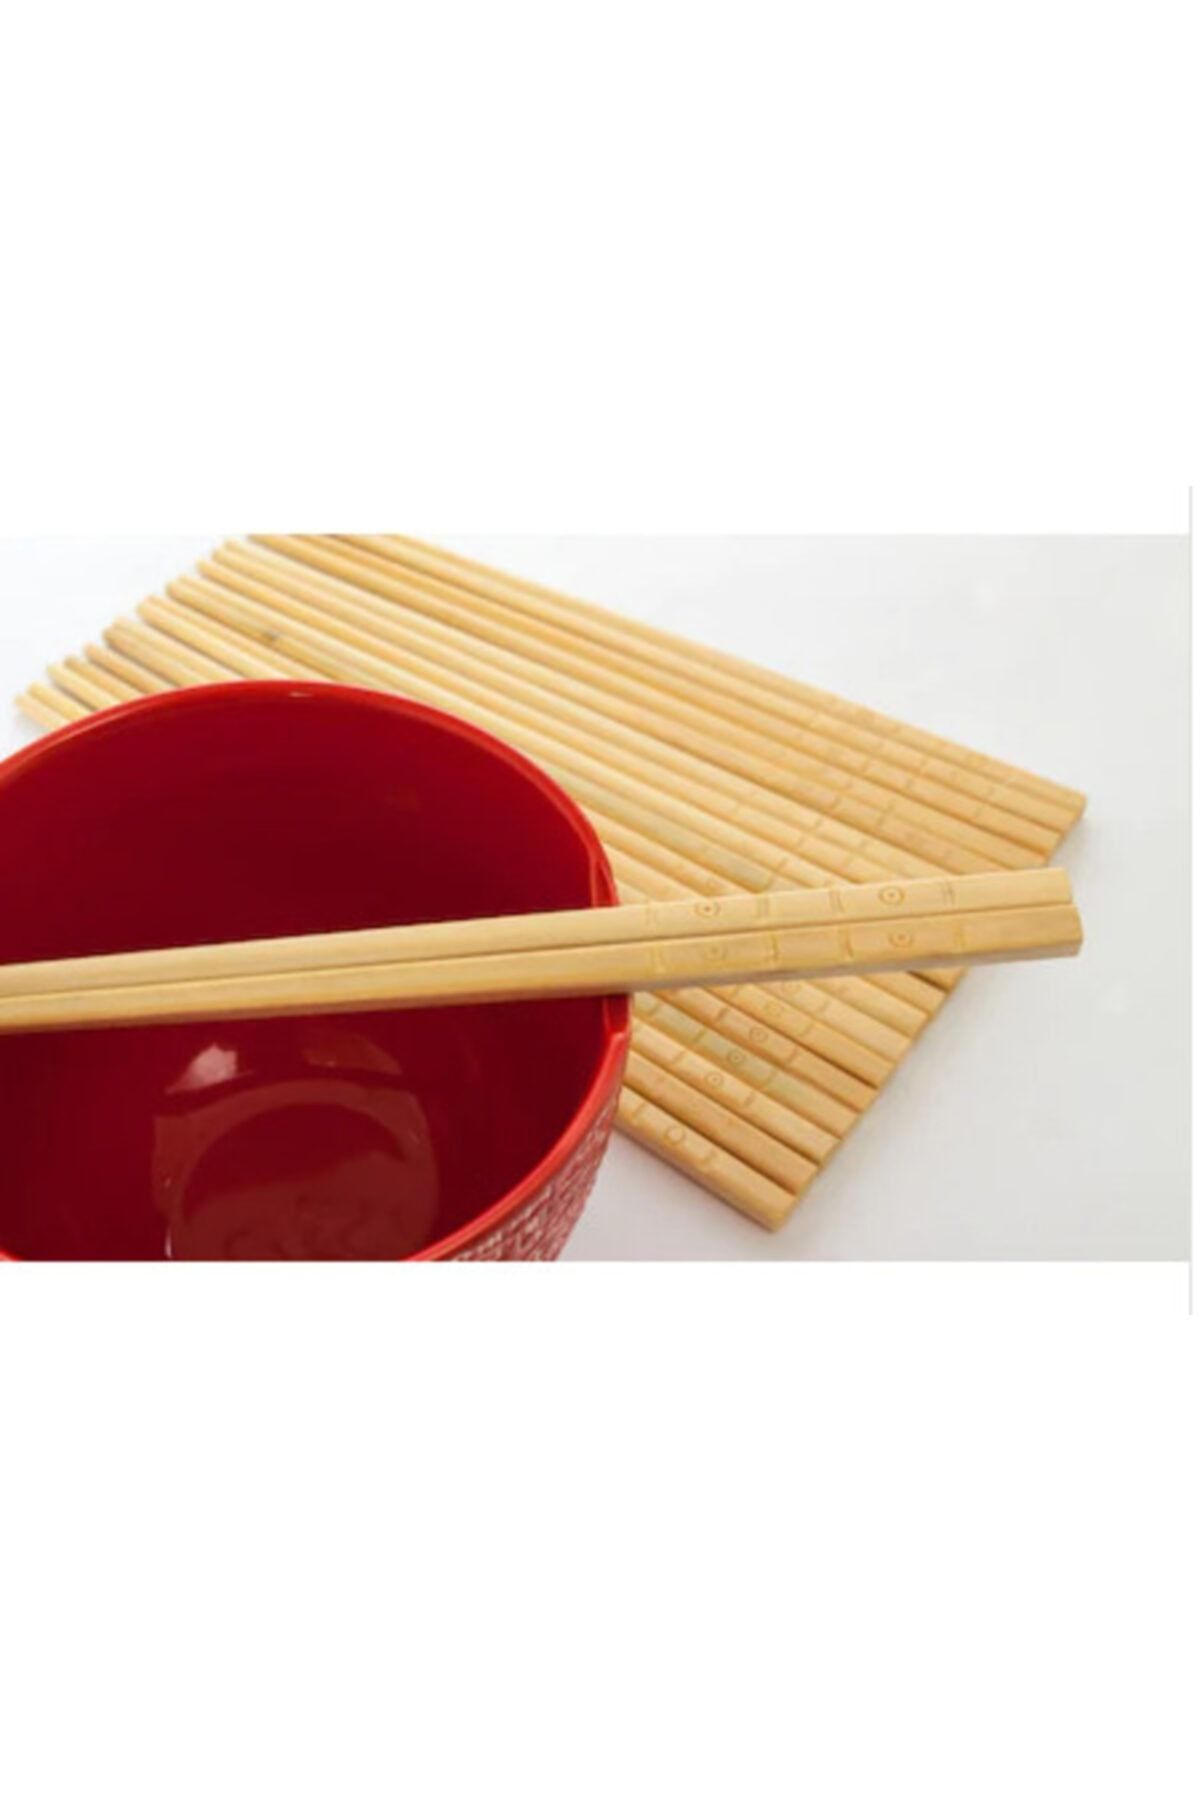 SUSHİSEPETİ Bambu Chopstick 10 Çift Yıkanabilir